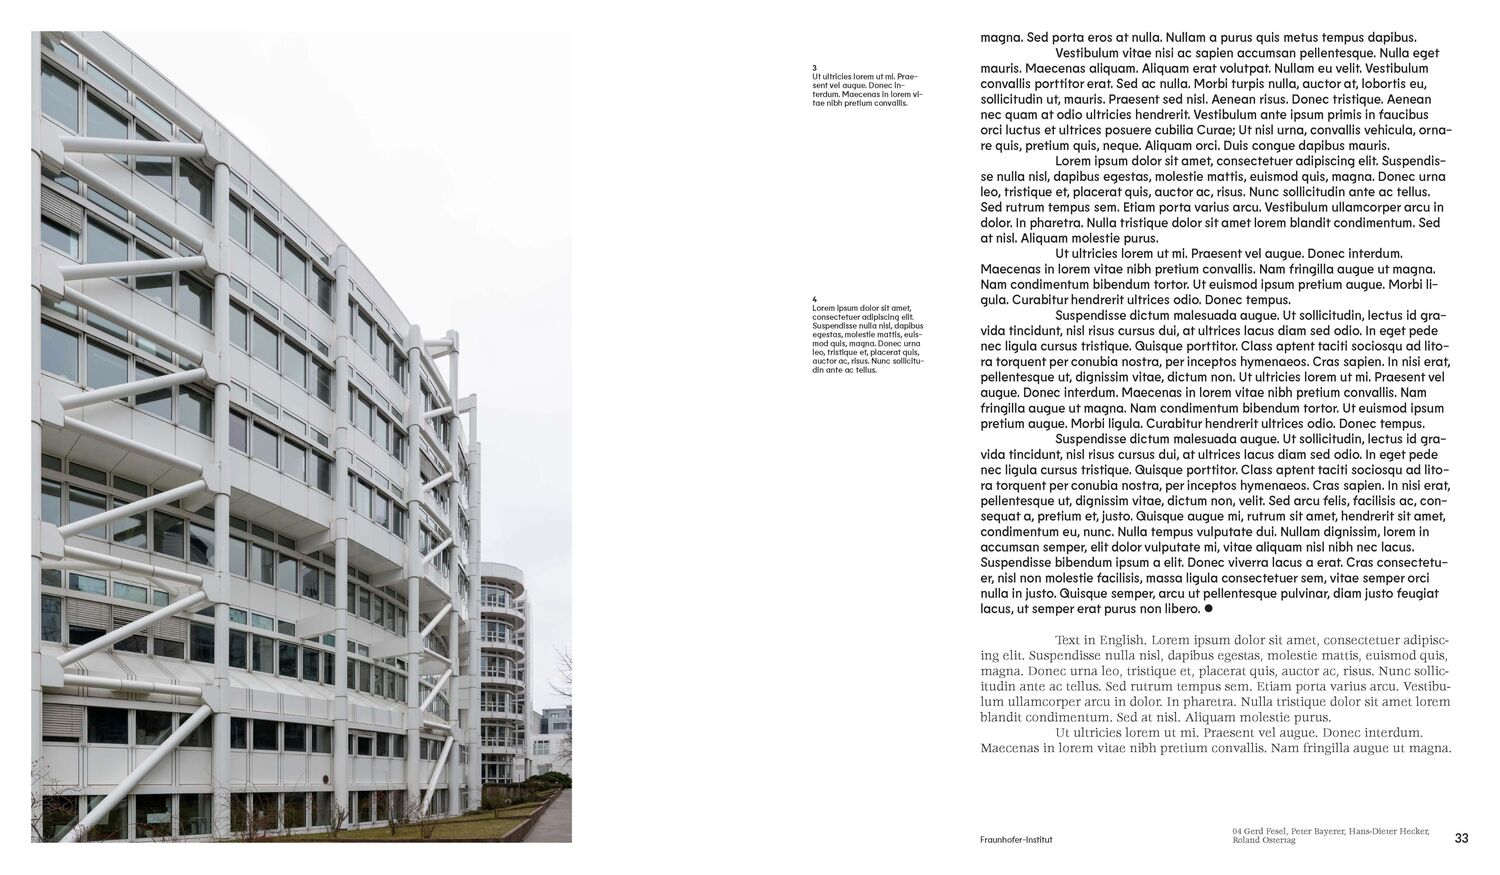 Bild: 9783721210194 | Postmodern Non-Residential Berlin | Claudia Kromrei | Taschenbuch